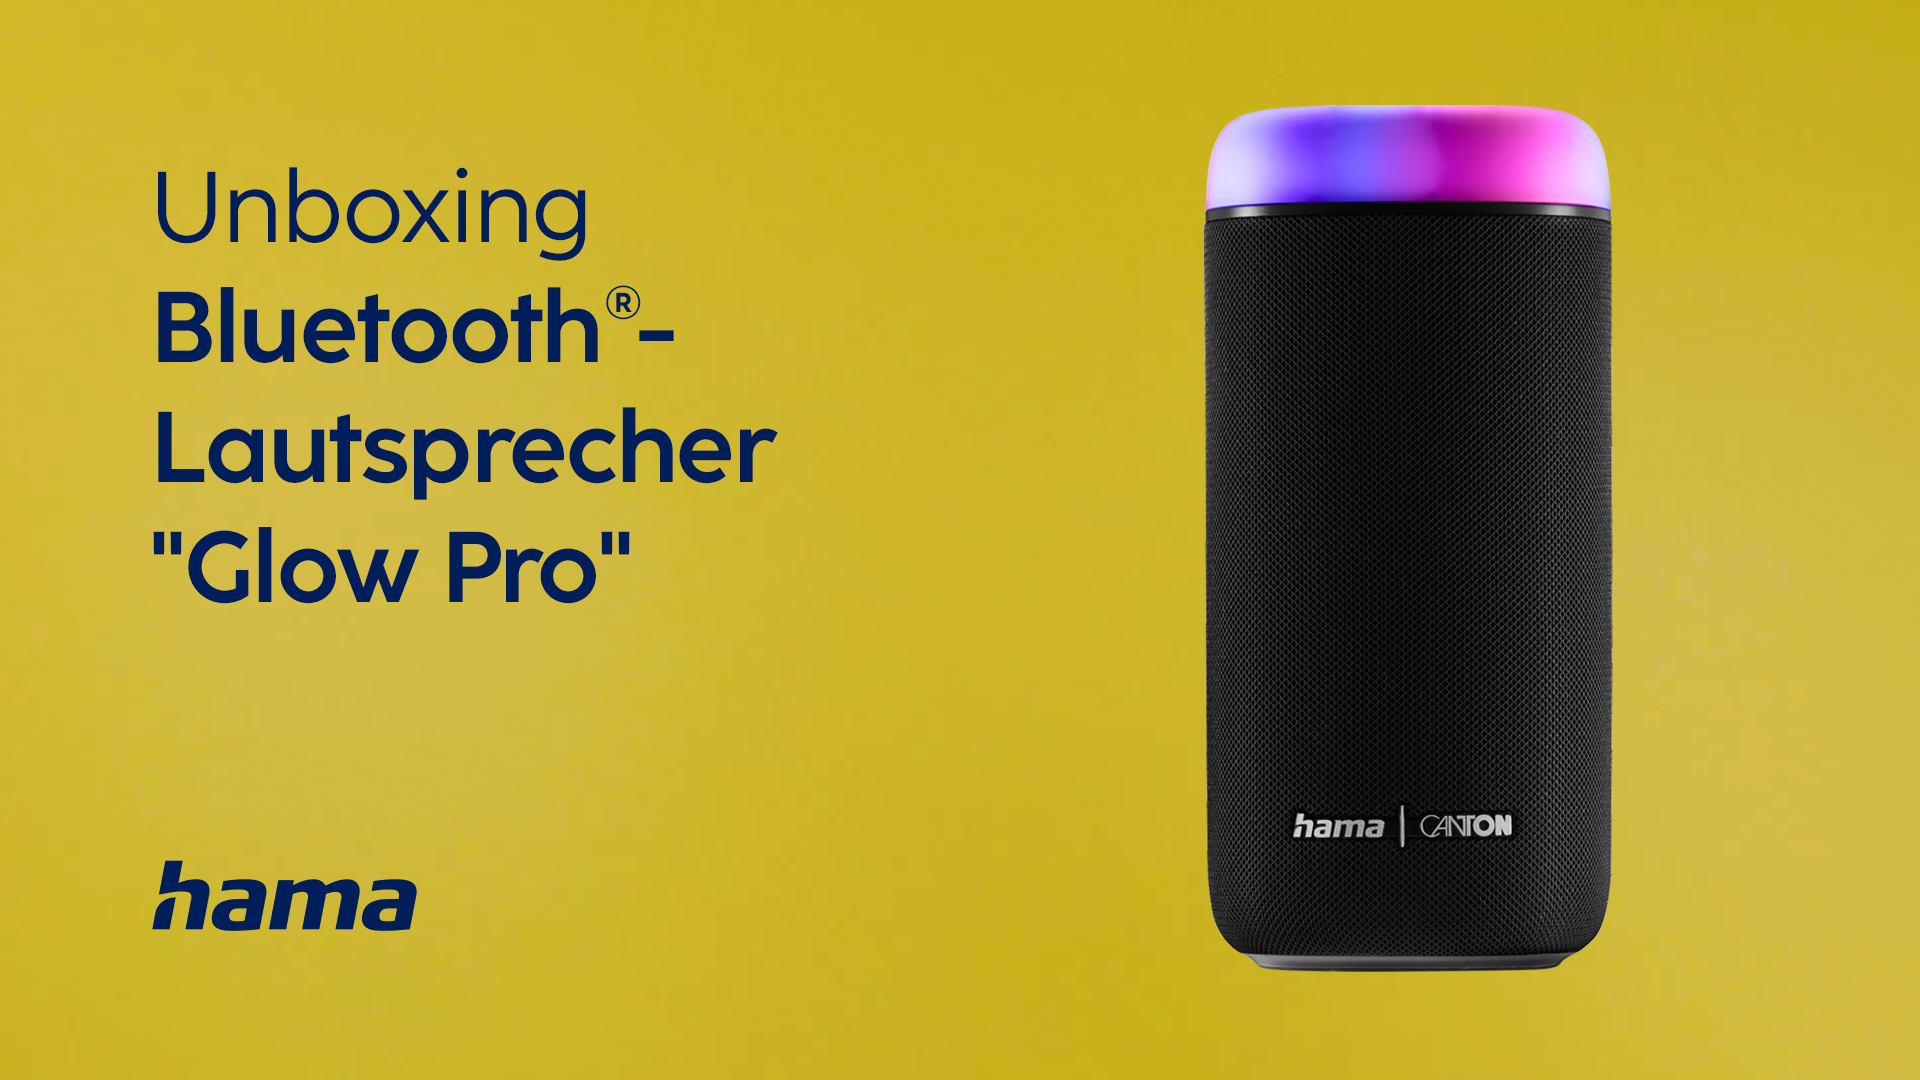 Hama Bluetooth-Lautsprecher "Glow Pro" | Unboxing